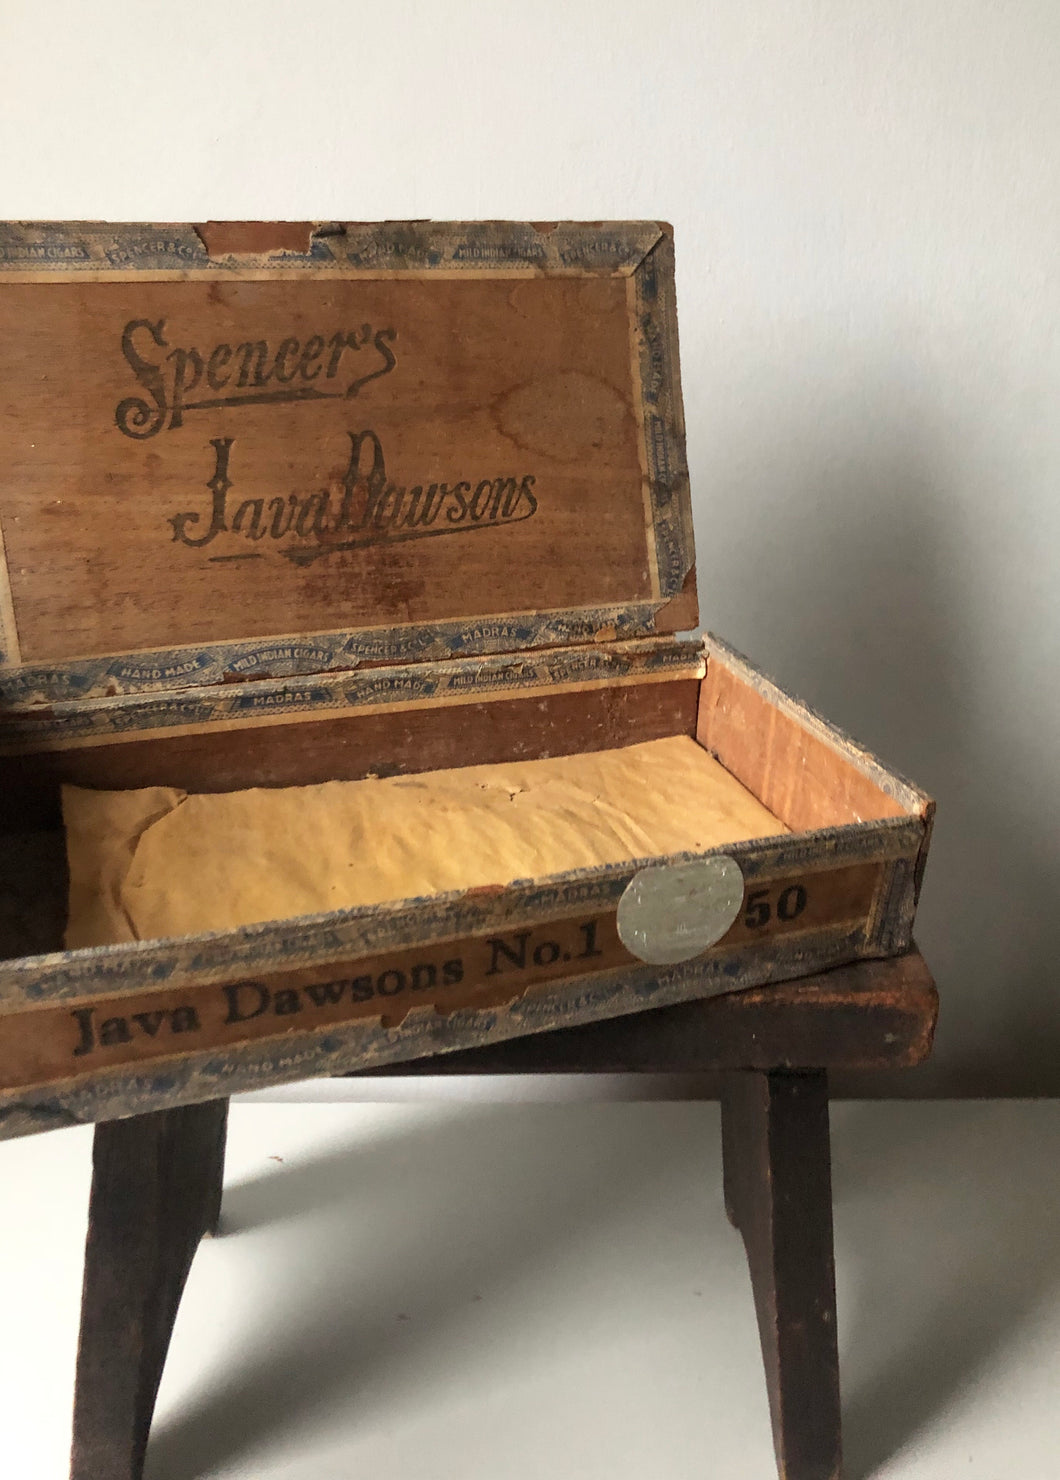 Vintage Wooden Cigar Box